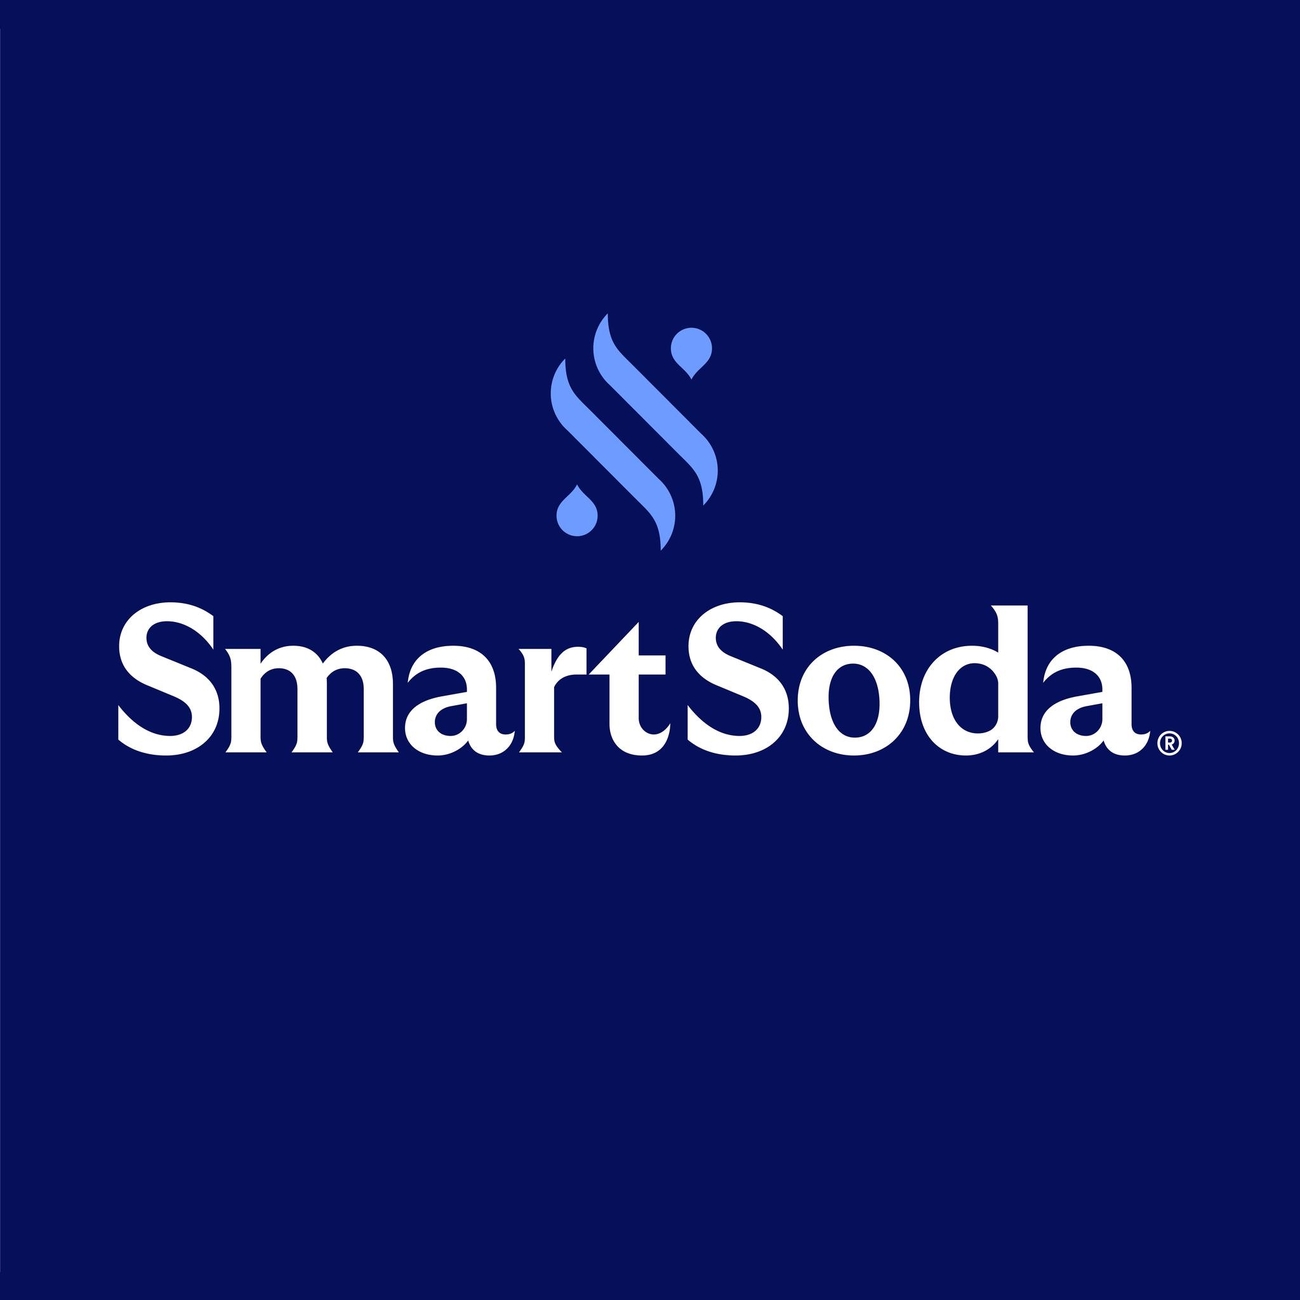 Smart Soda Holdings Inc